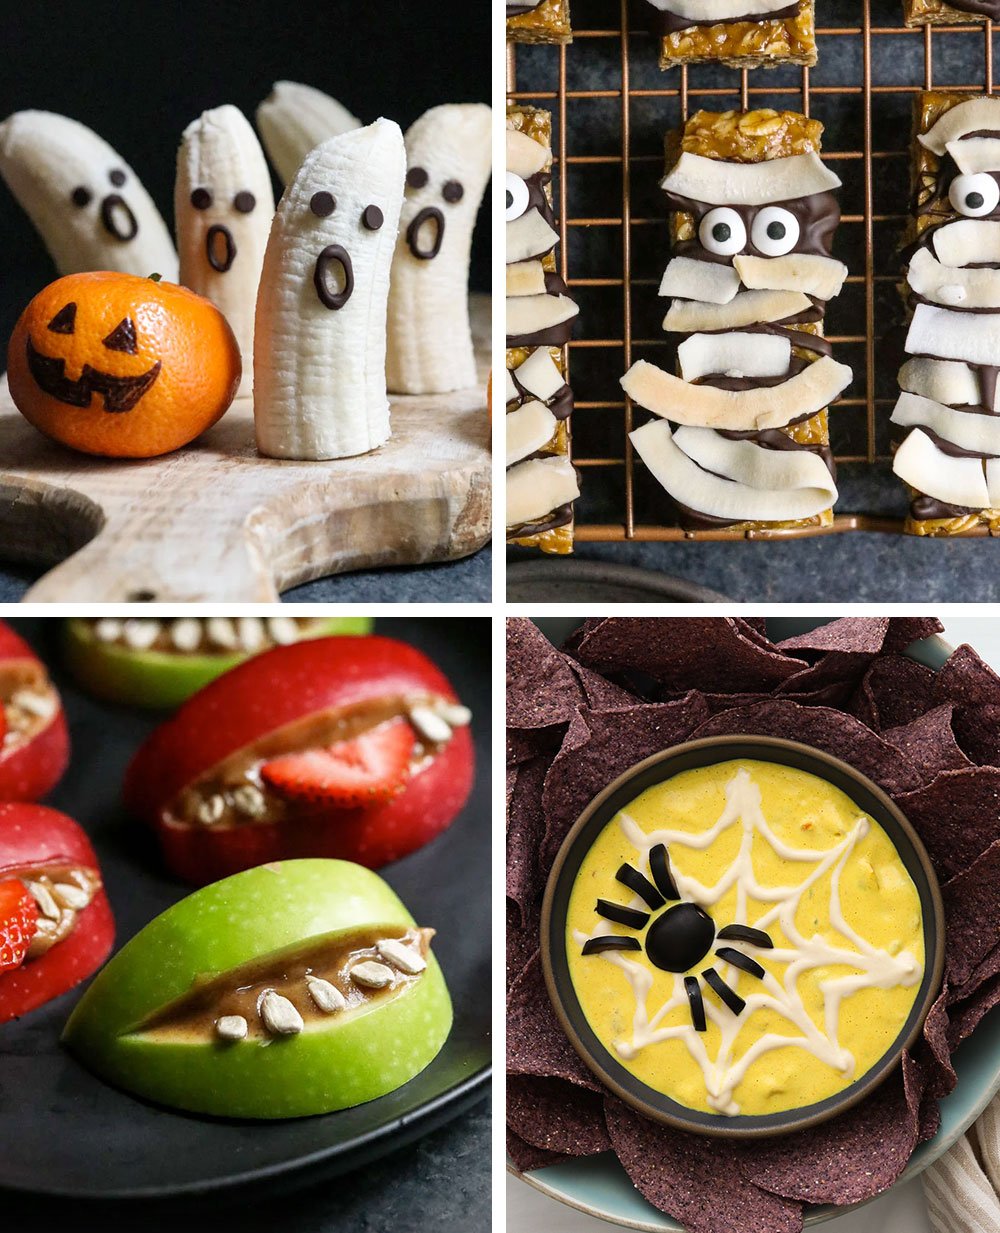 Fun Halloween Lunchbox Ideas for Kids - Family Fresh Meals